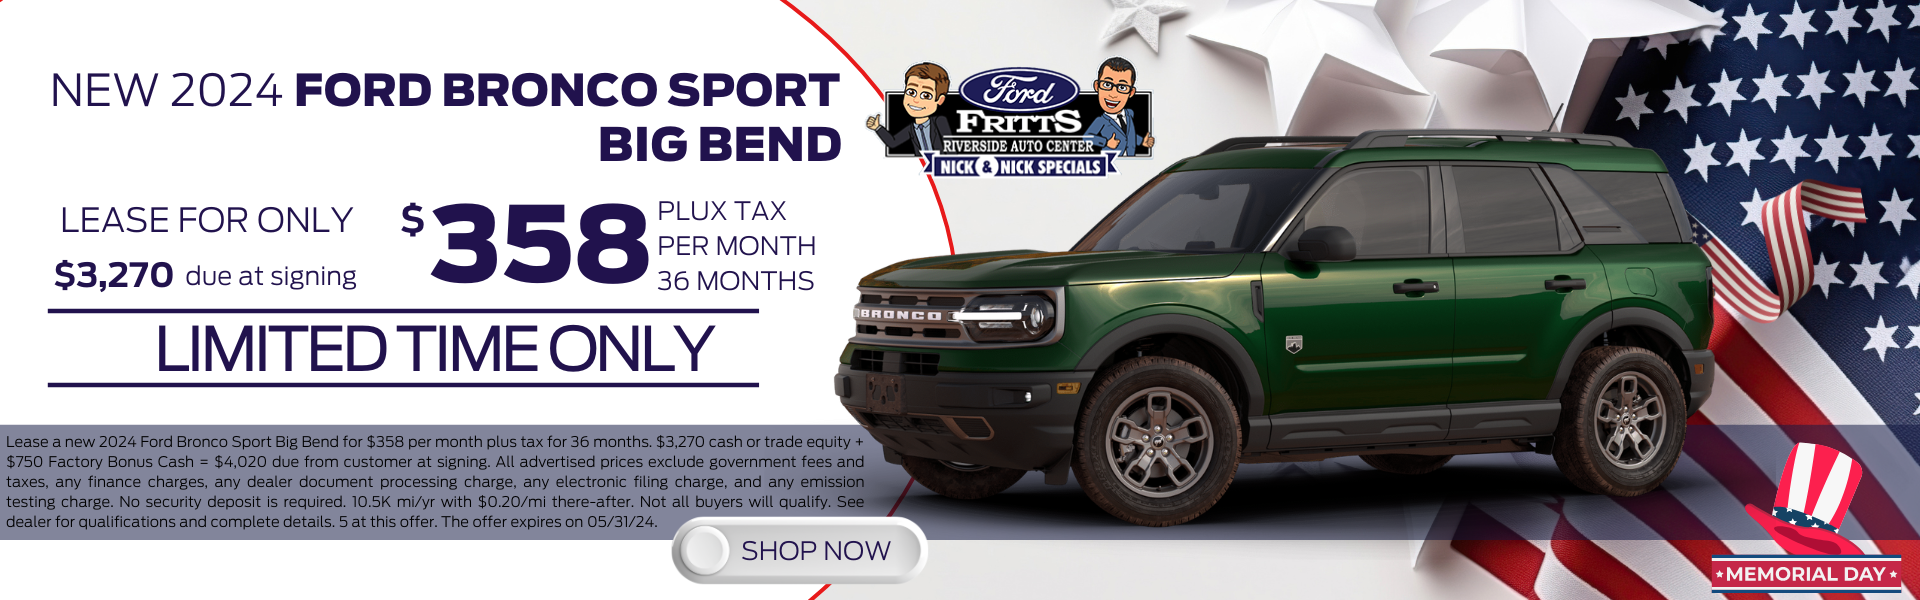 2024 Ford Bronco Sport Big Bend Lease Offer